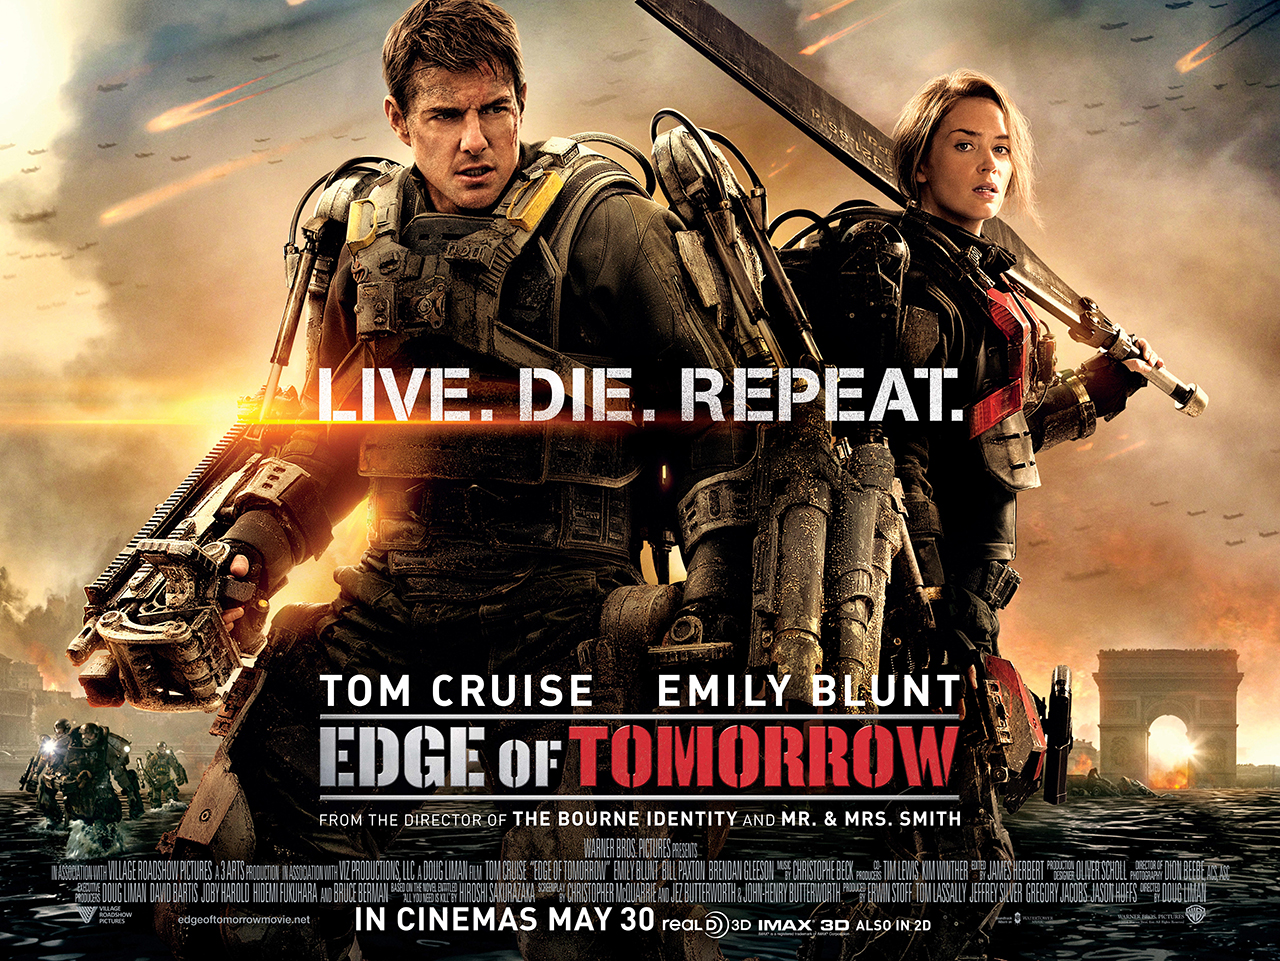 Edge of tomorrow cast